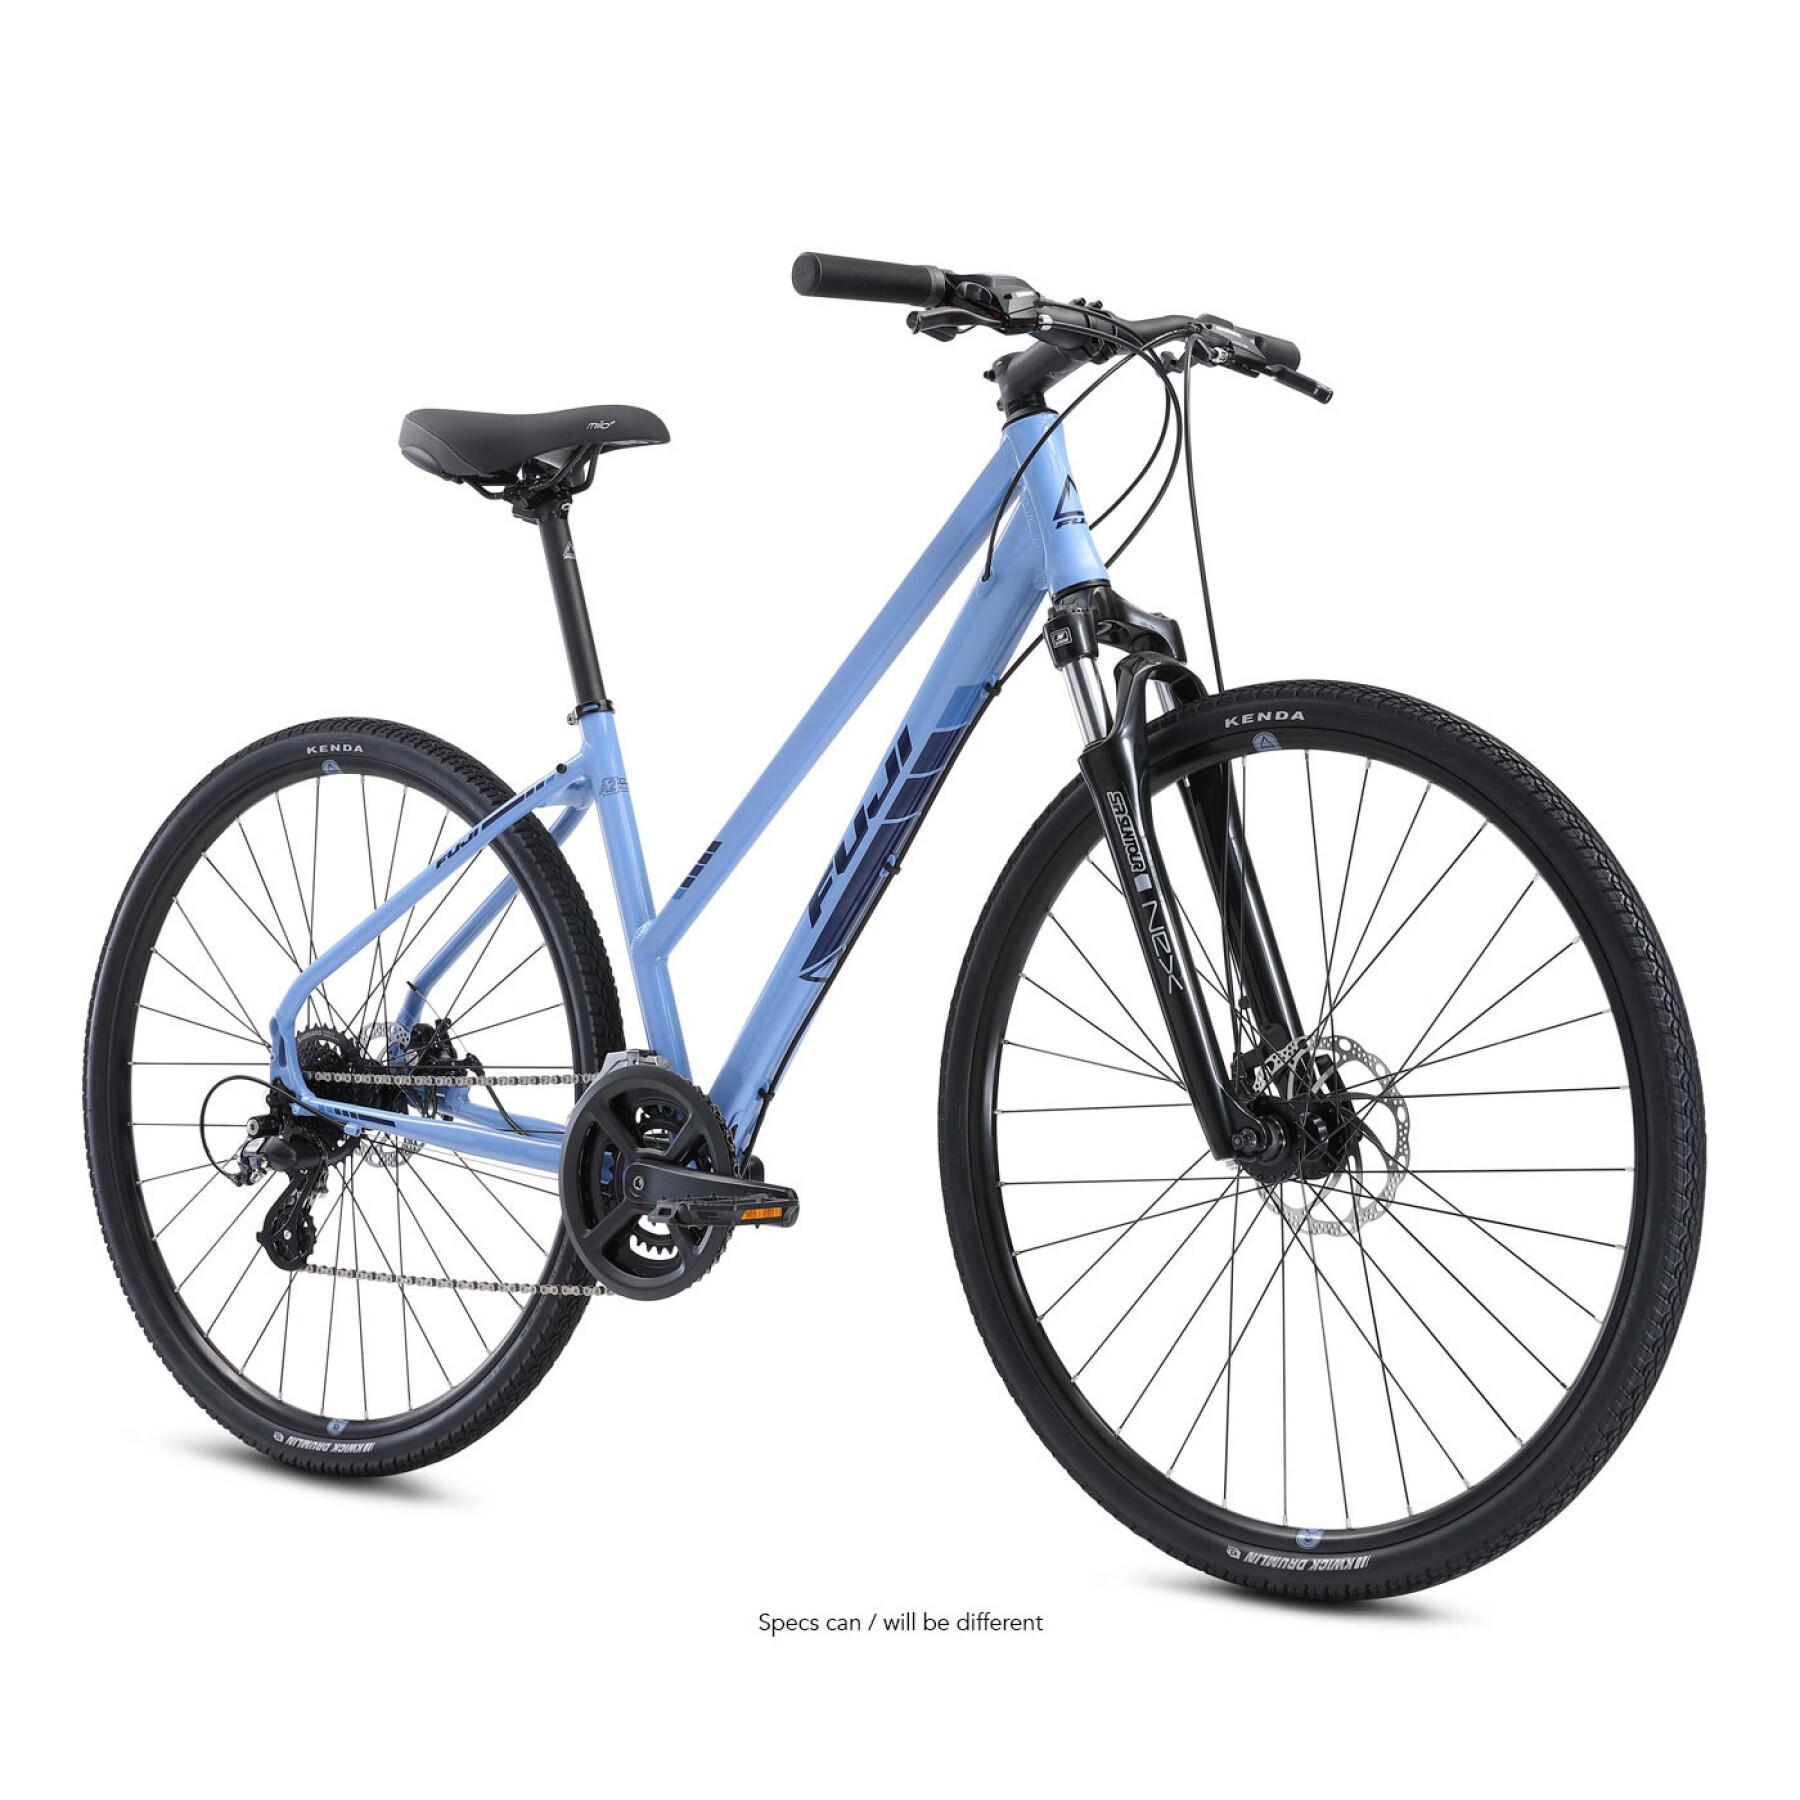 Bike Fuji Traverse 1.5 Disc ST 17 2022 B-Merchandise